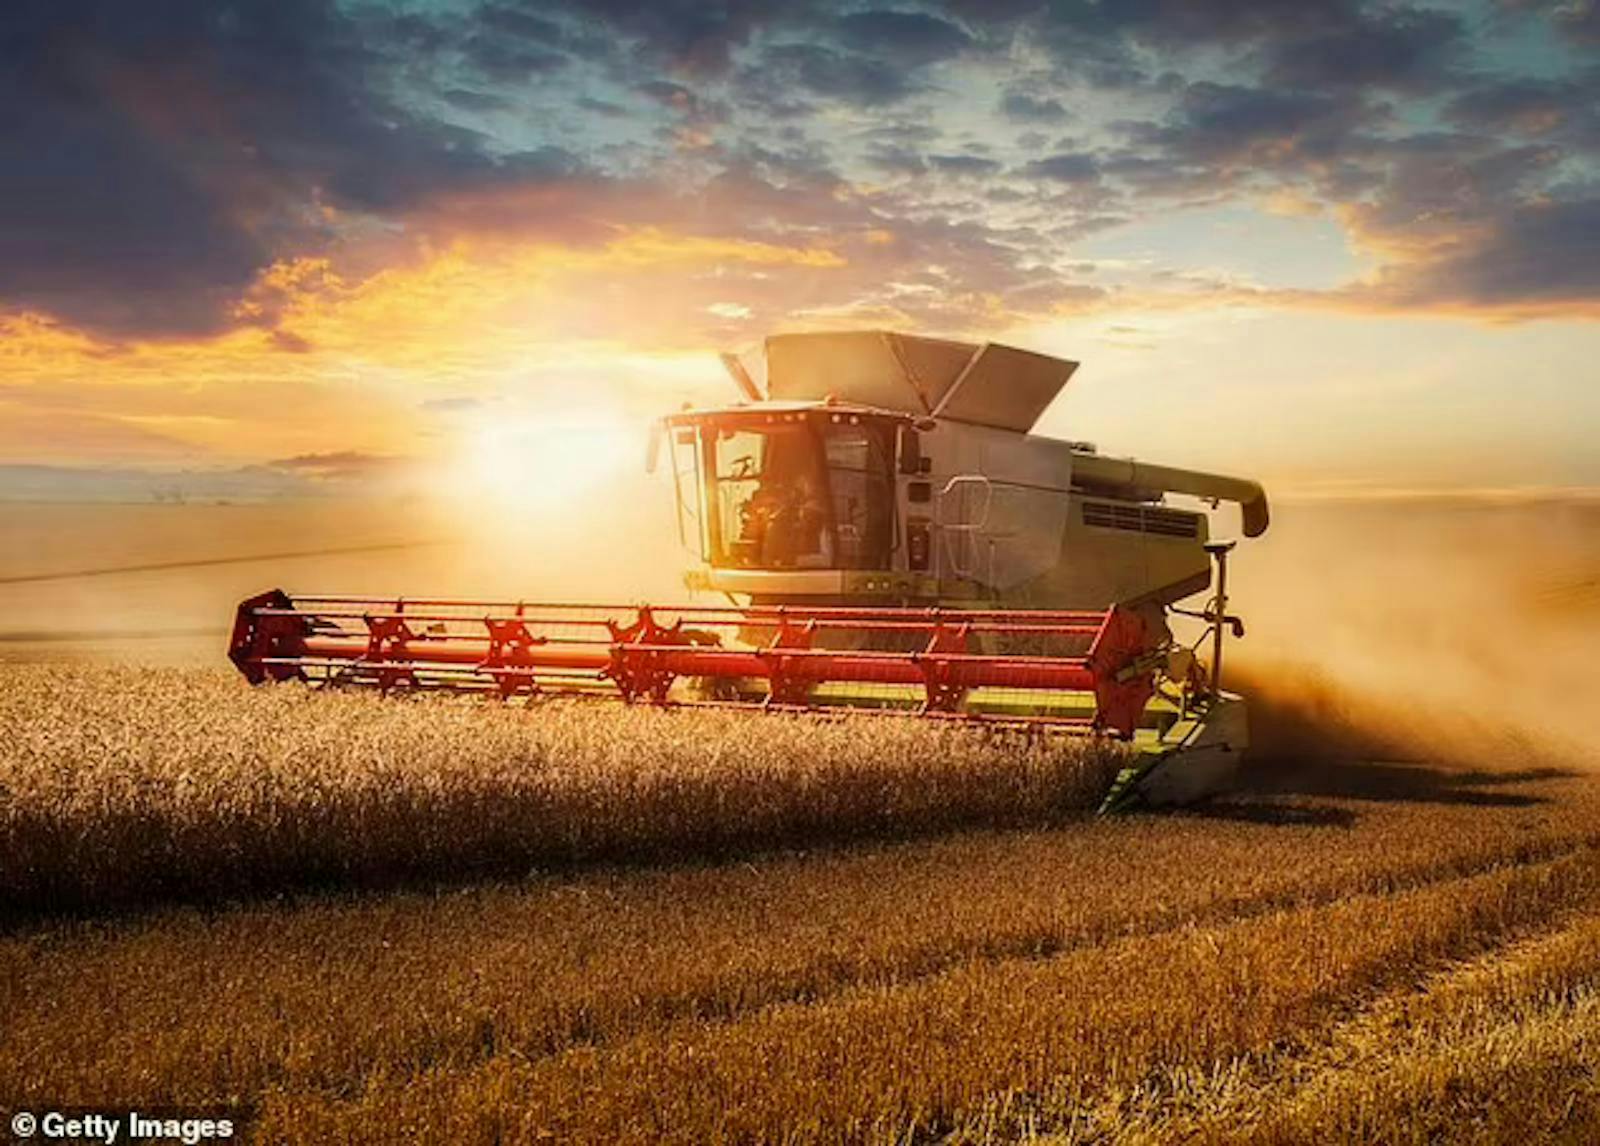 A combine harvester in a sunlit field